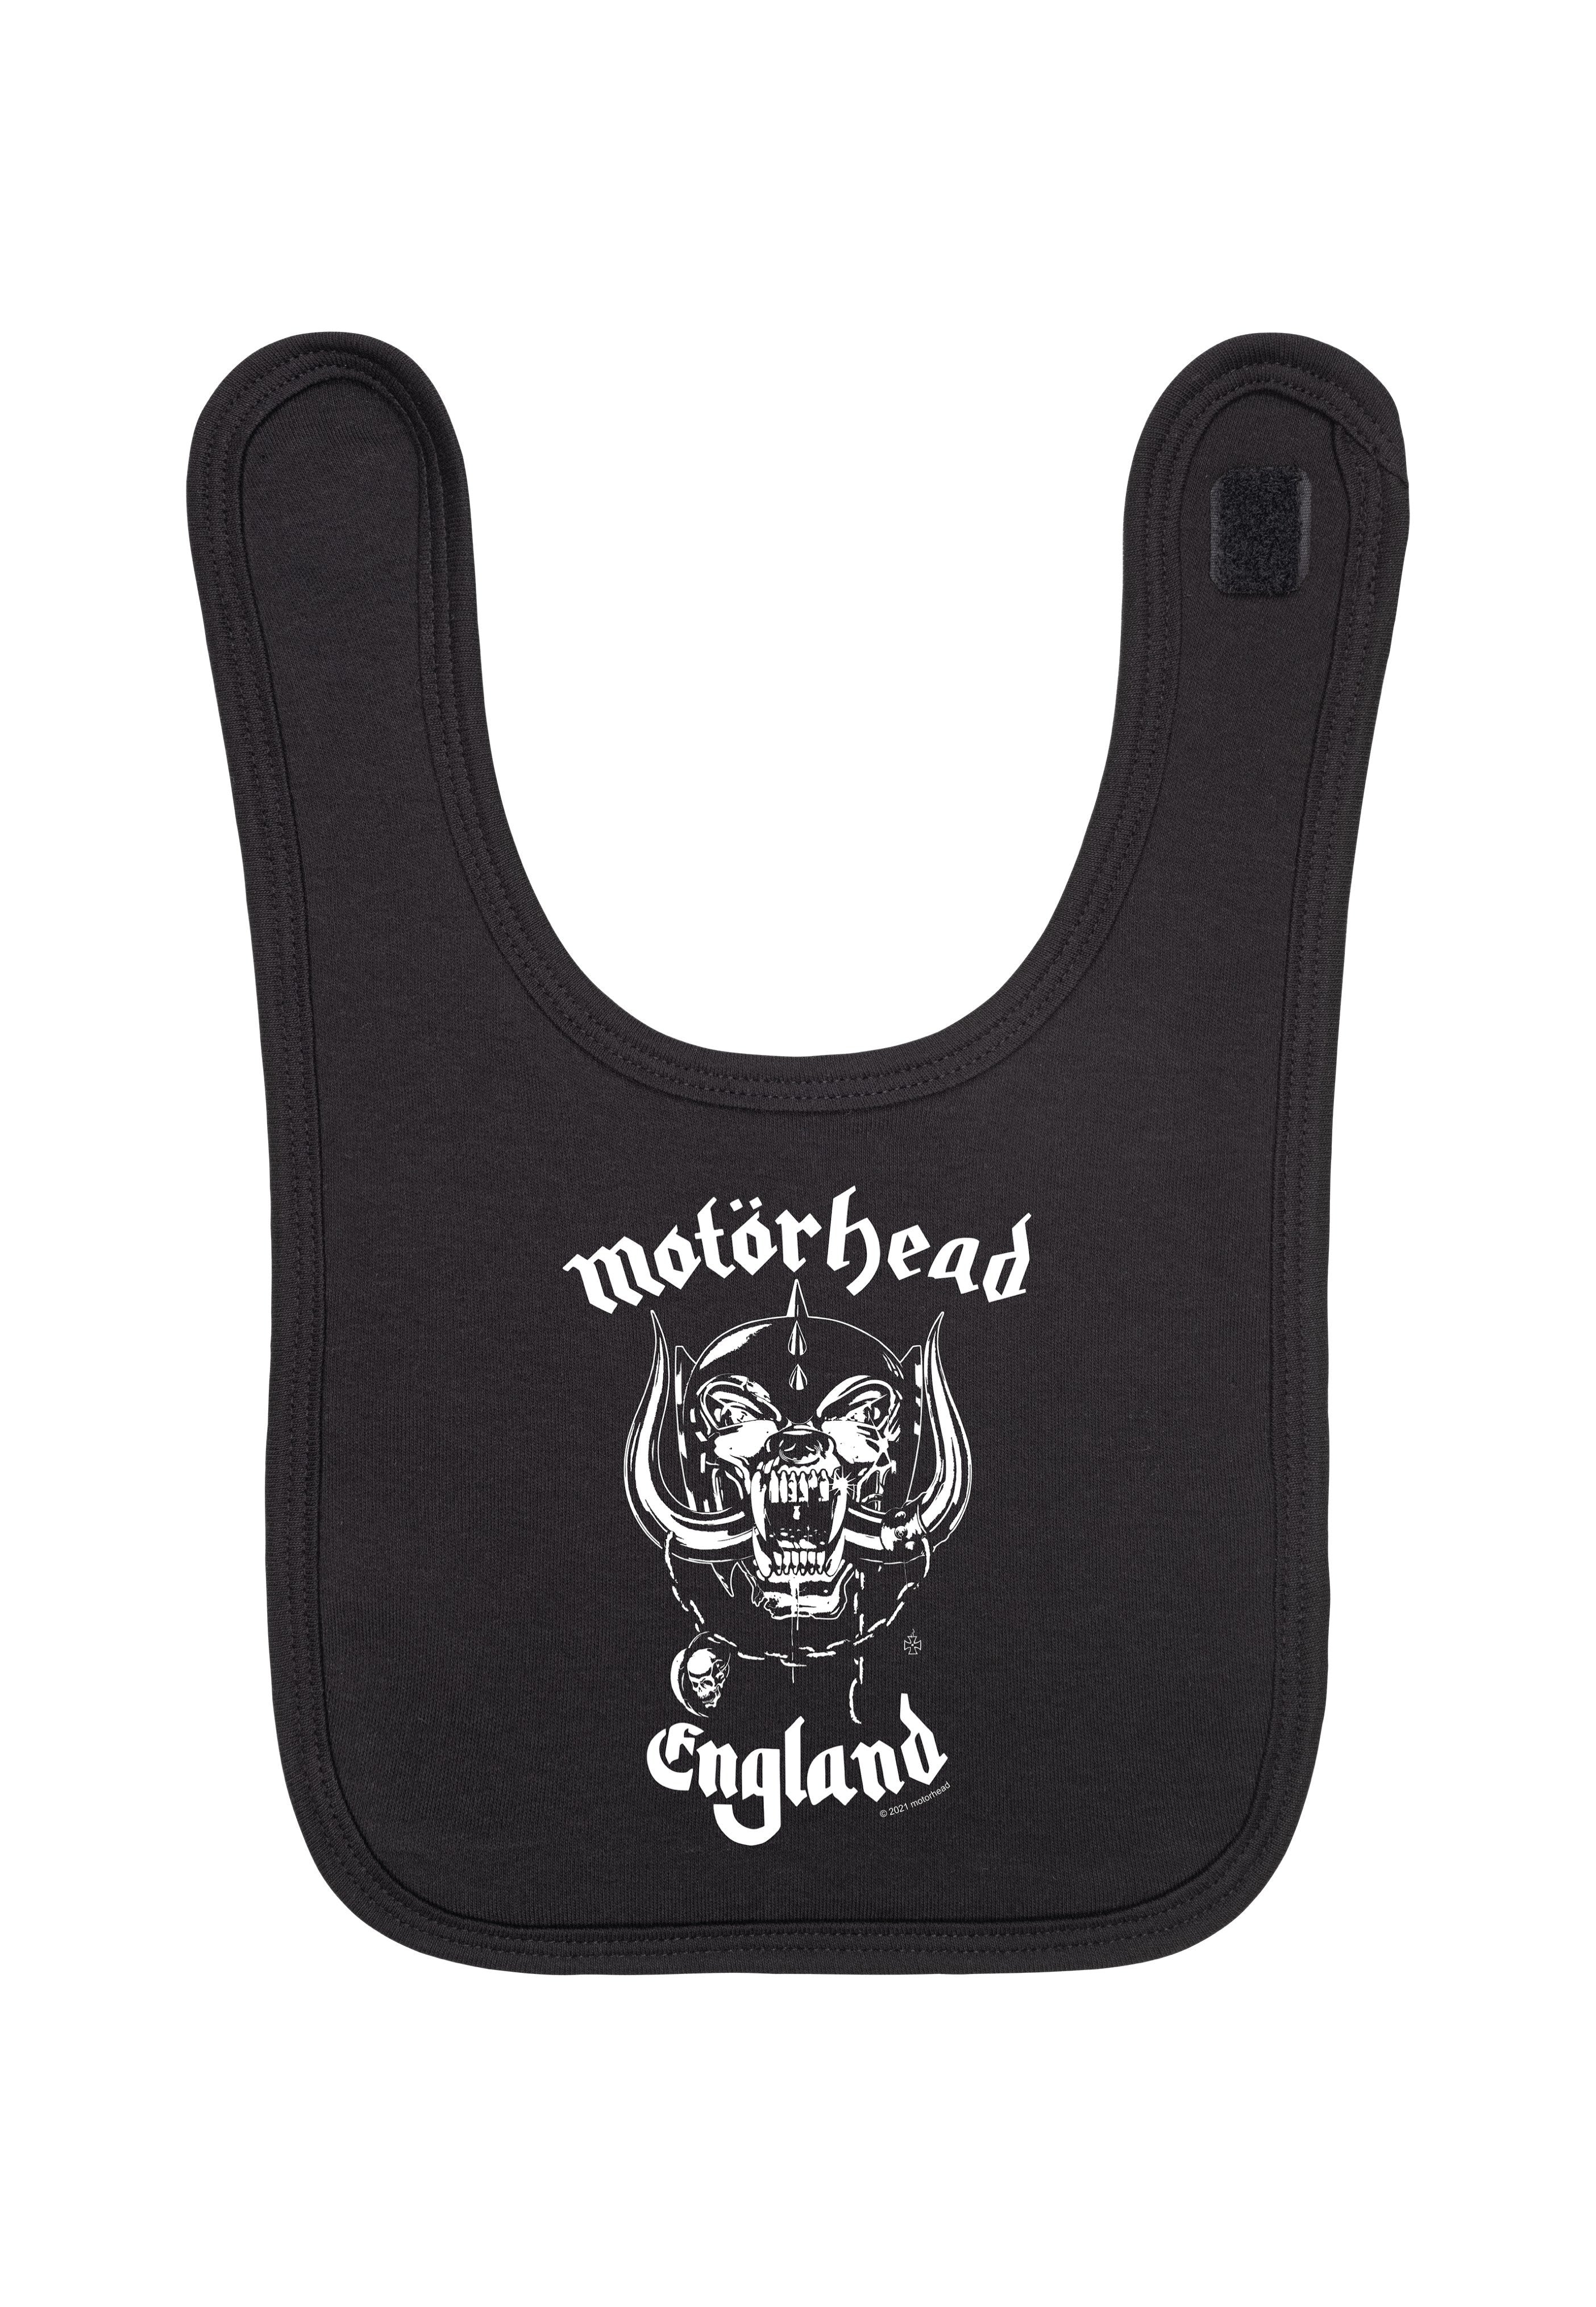 Motörhead - England Black/White - Baby Bib